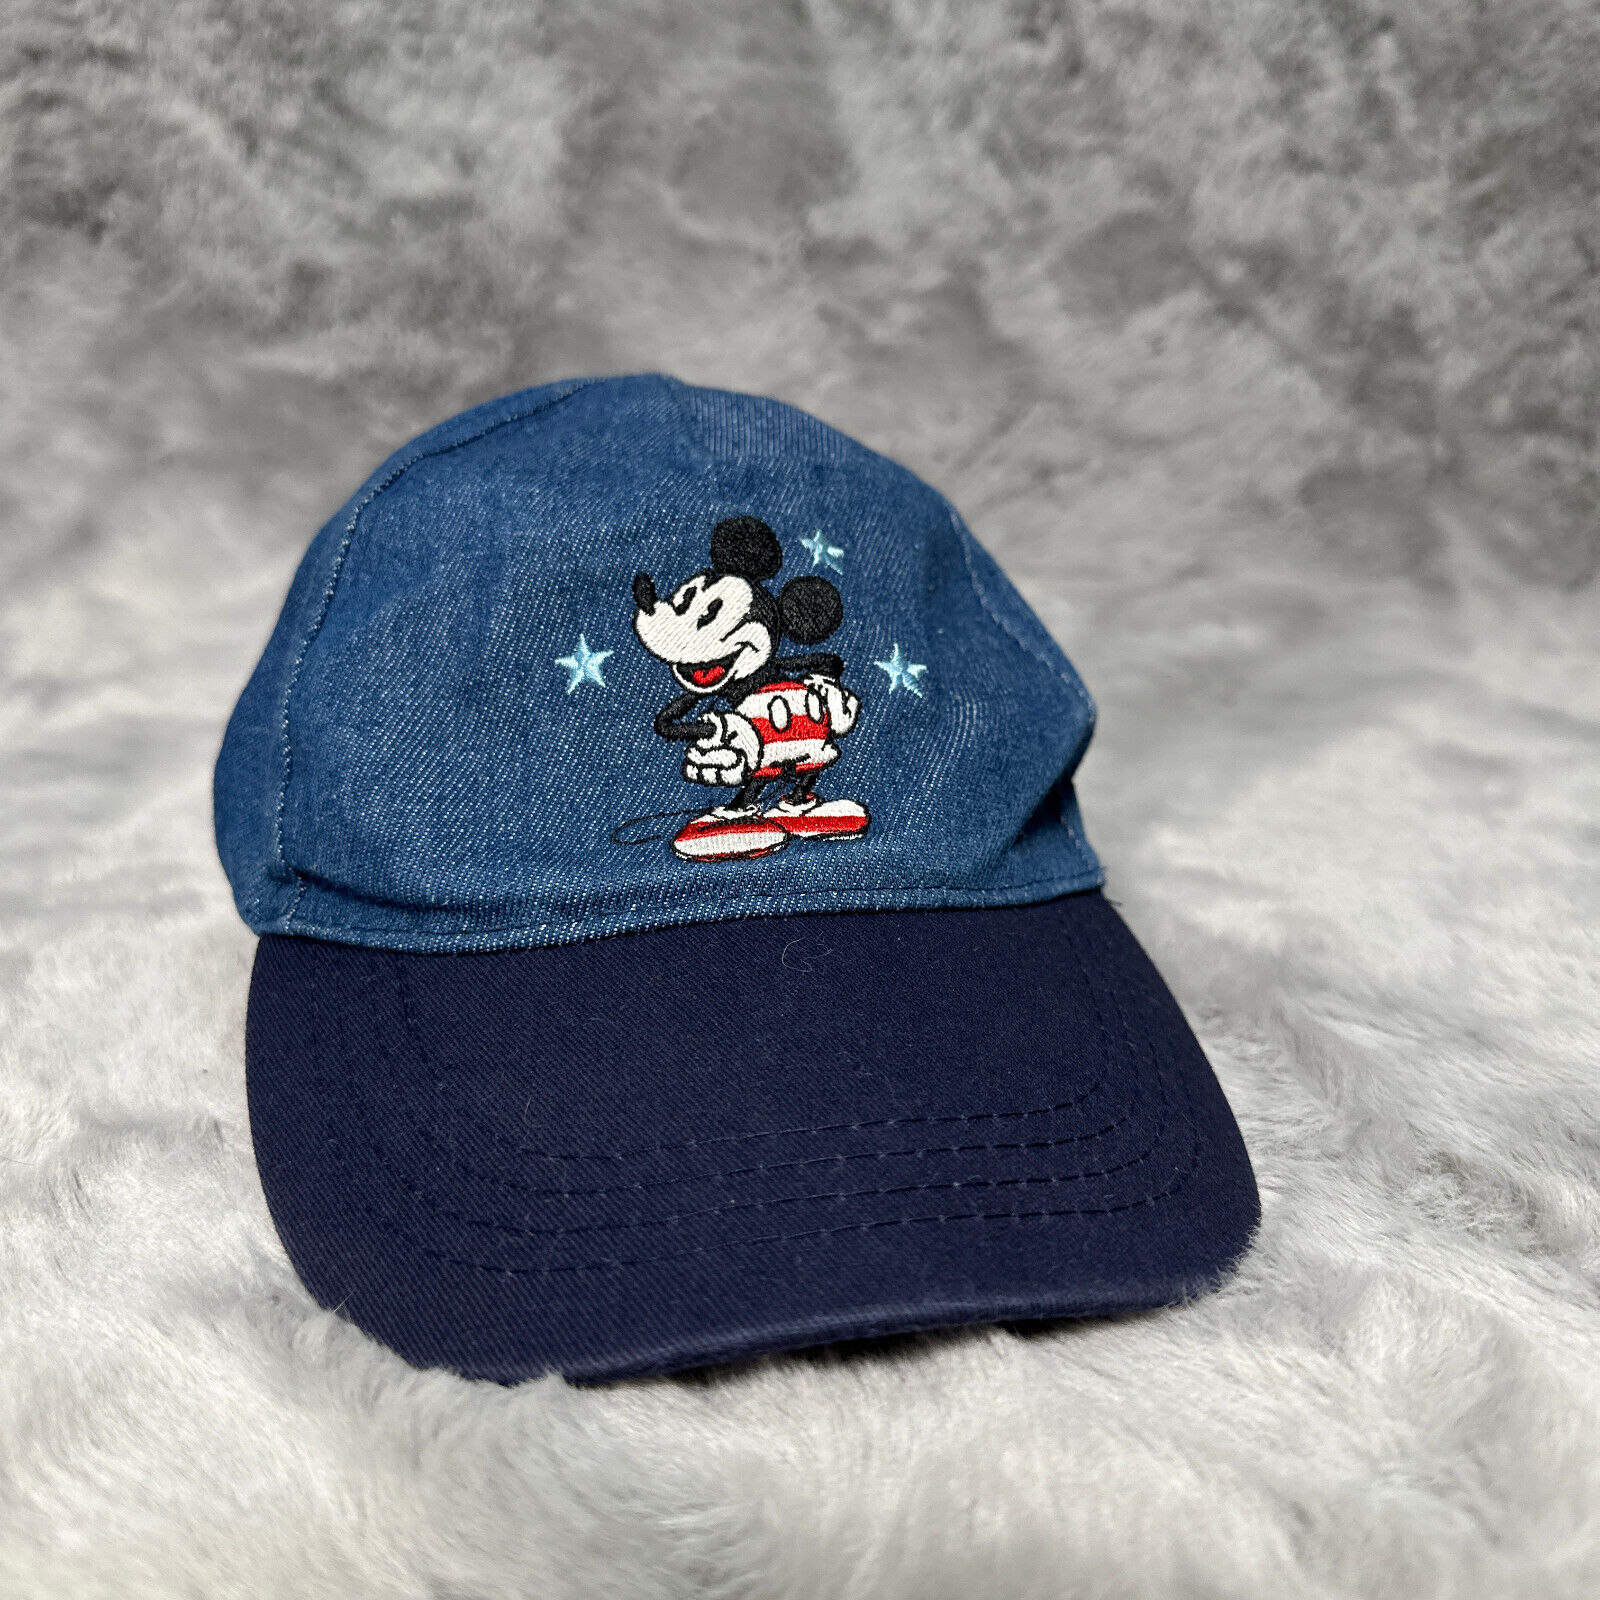 Mickey Mouse Hat Blue Denim Strapback Americana Patriotic Casual Adjustable